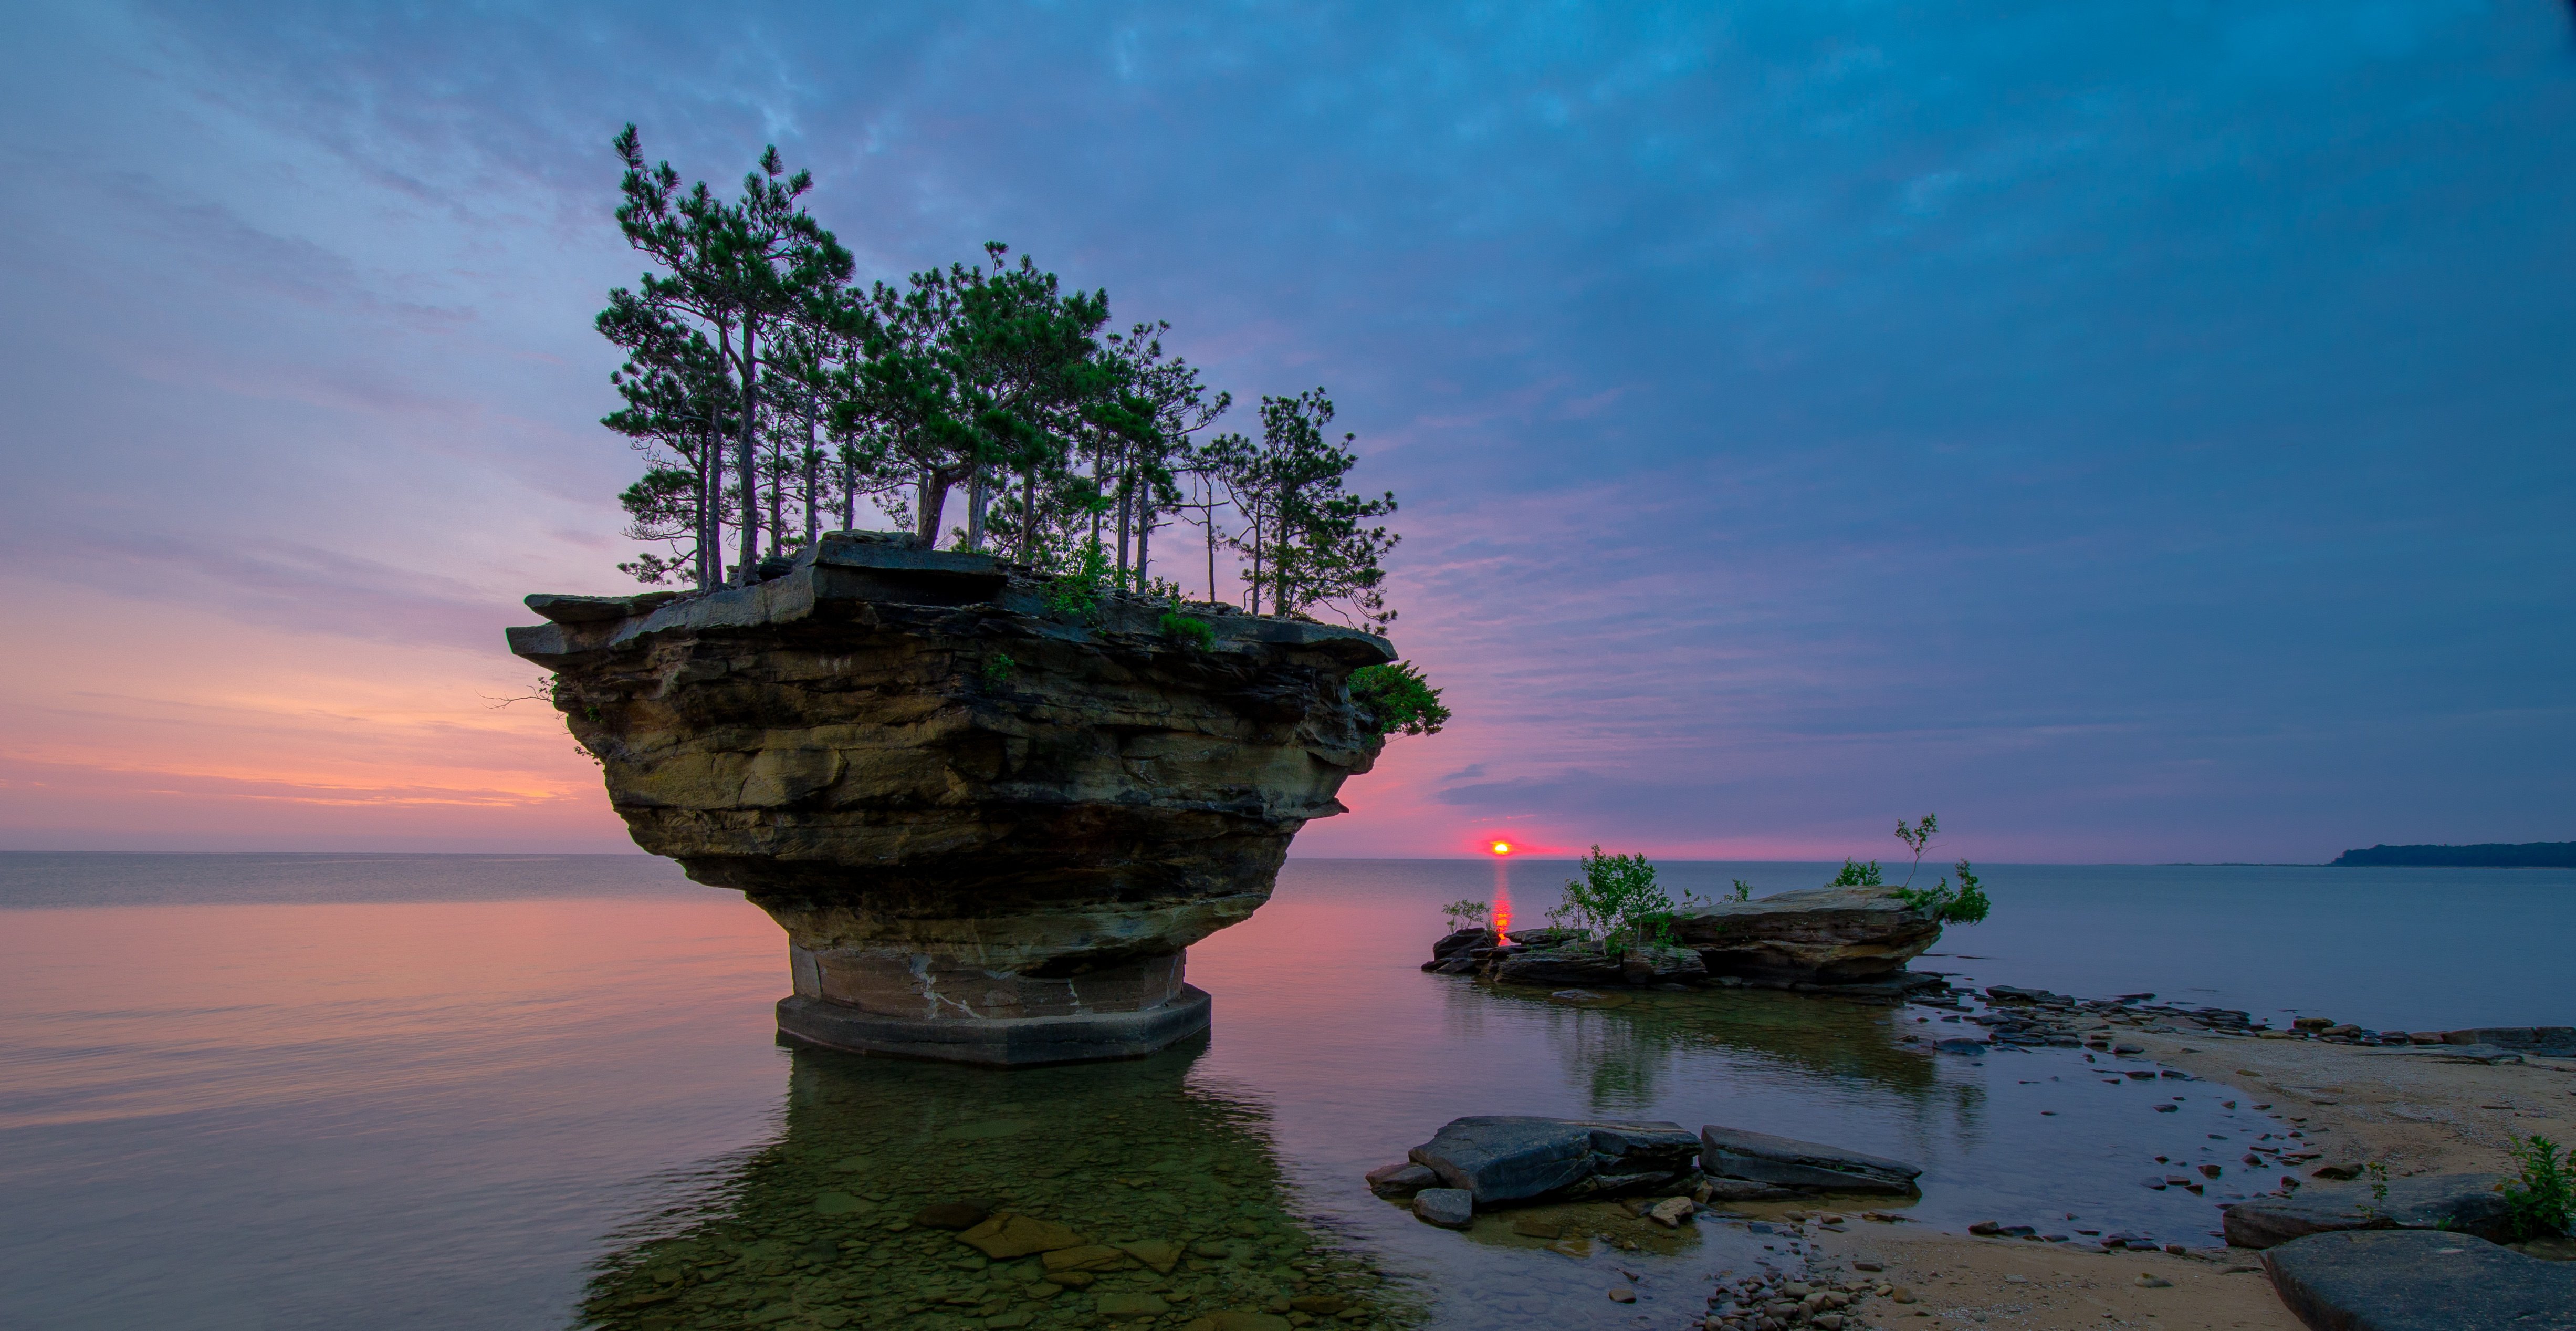 Michigan Lake Huron sunset rock trees landscape wallpaper background